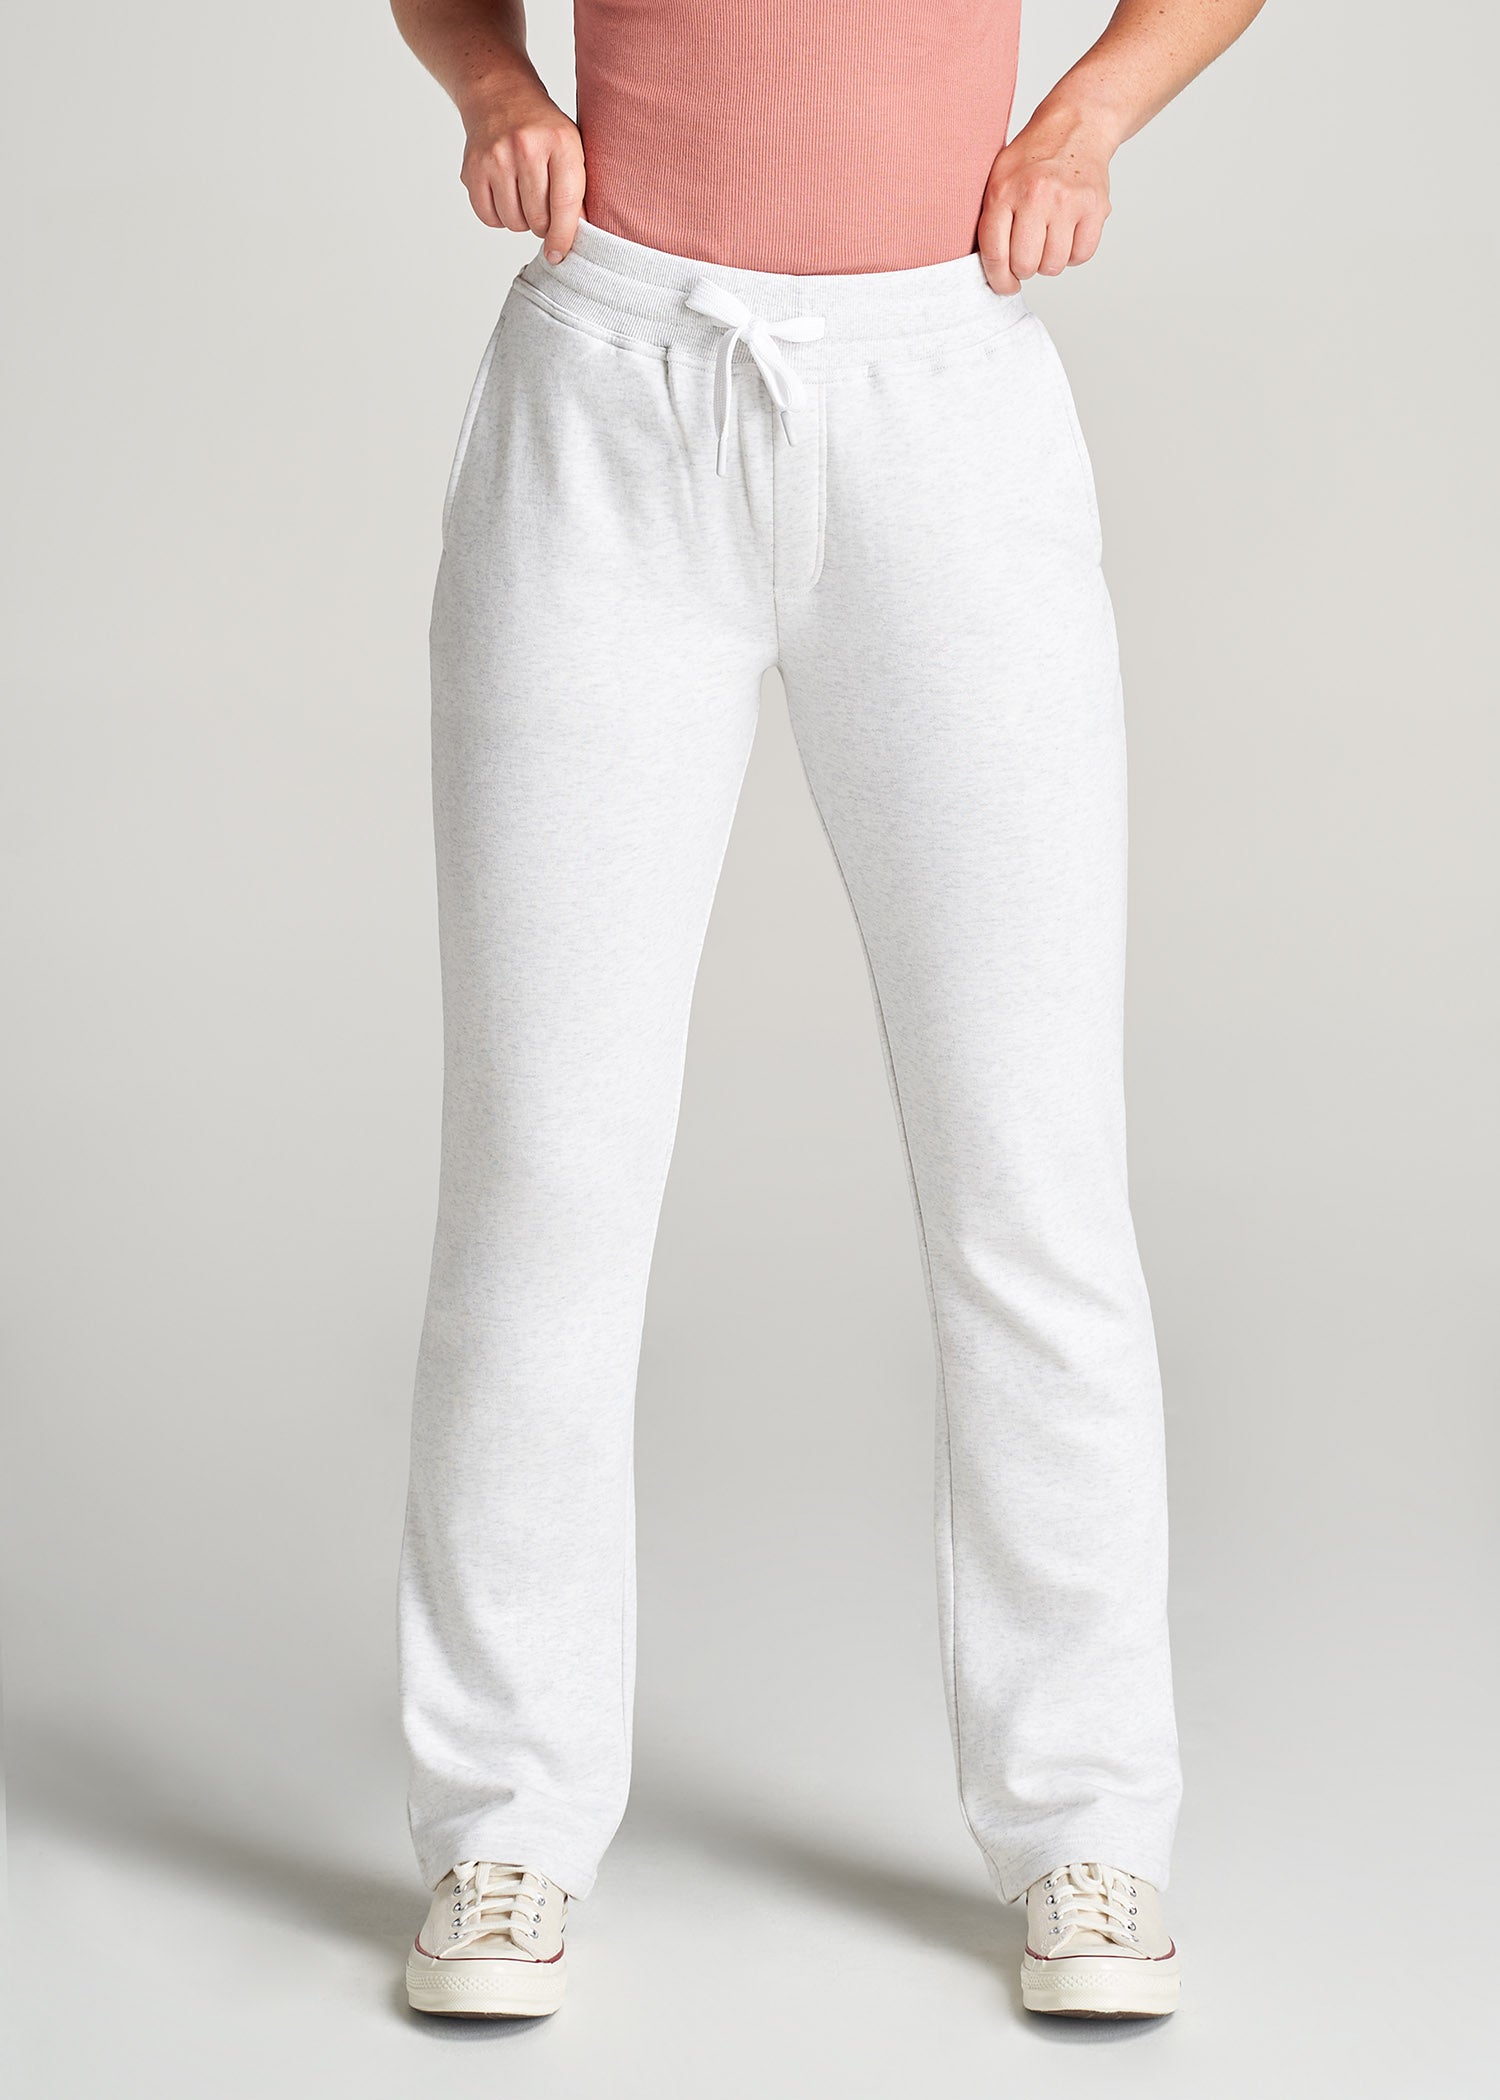 Grey Sweatpants for Tall Women: Fleece Open Bottom Pants – American Tall